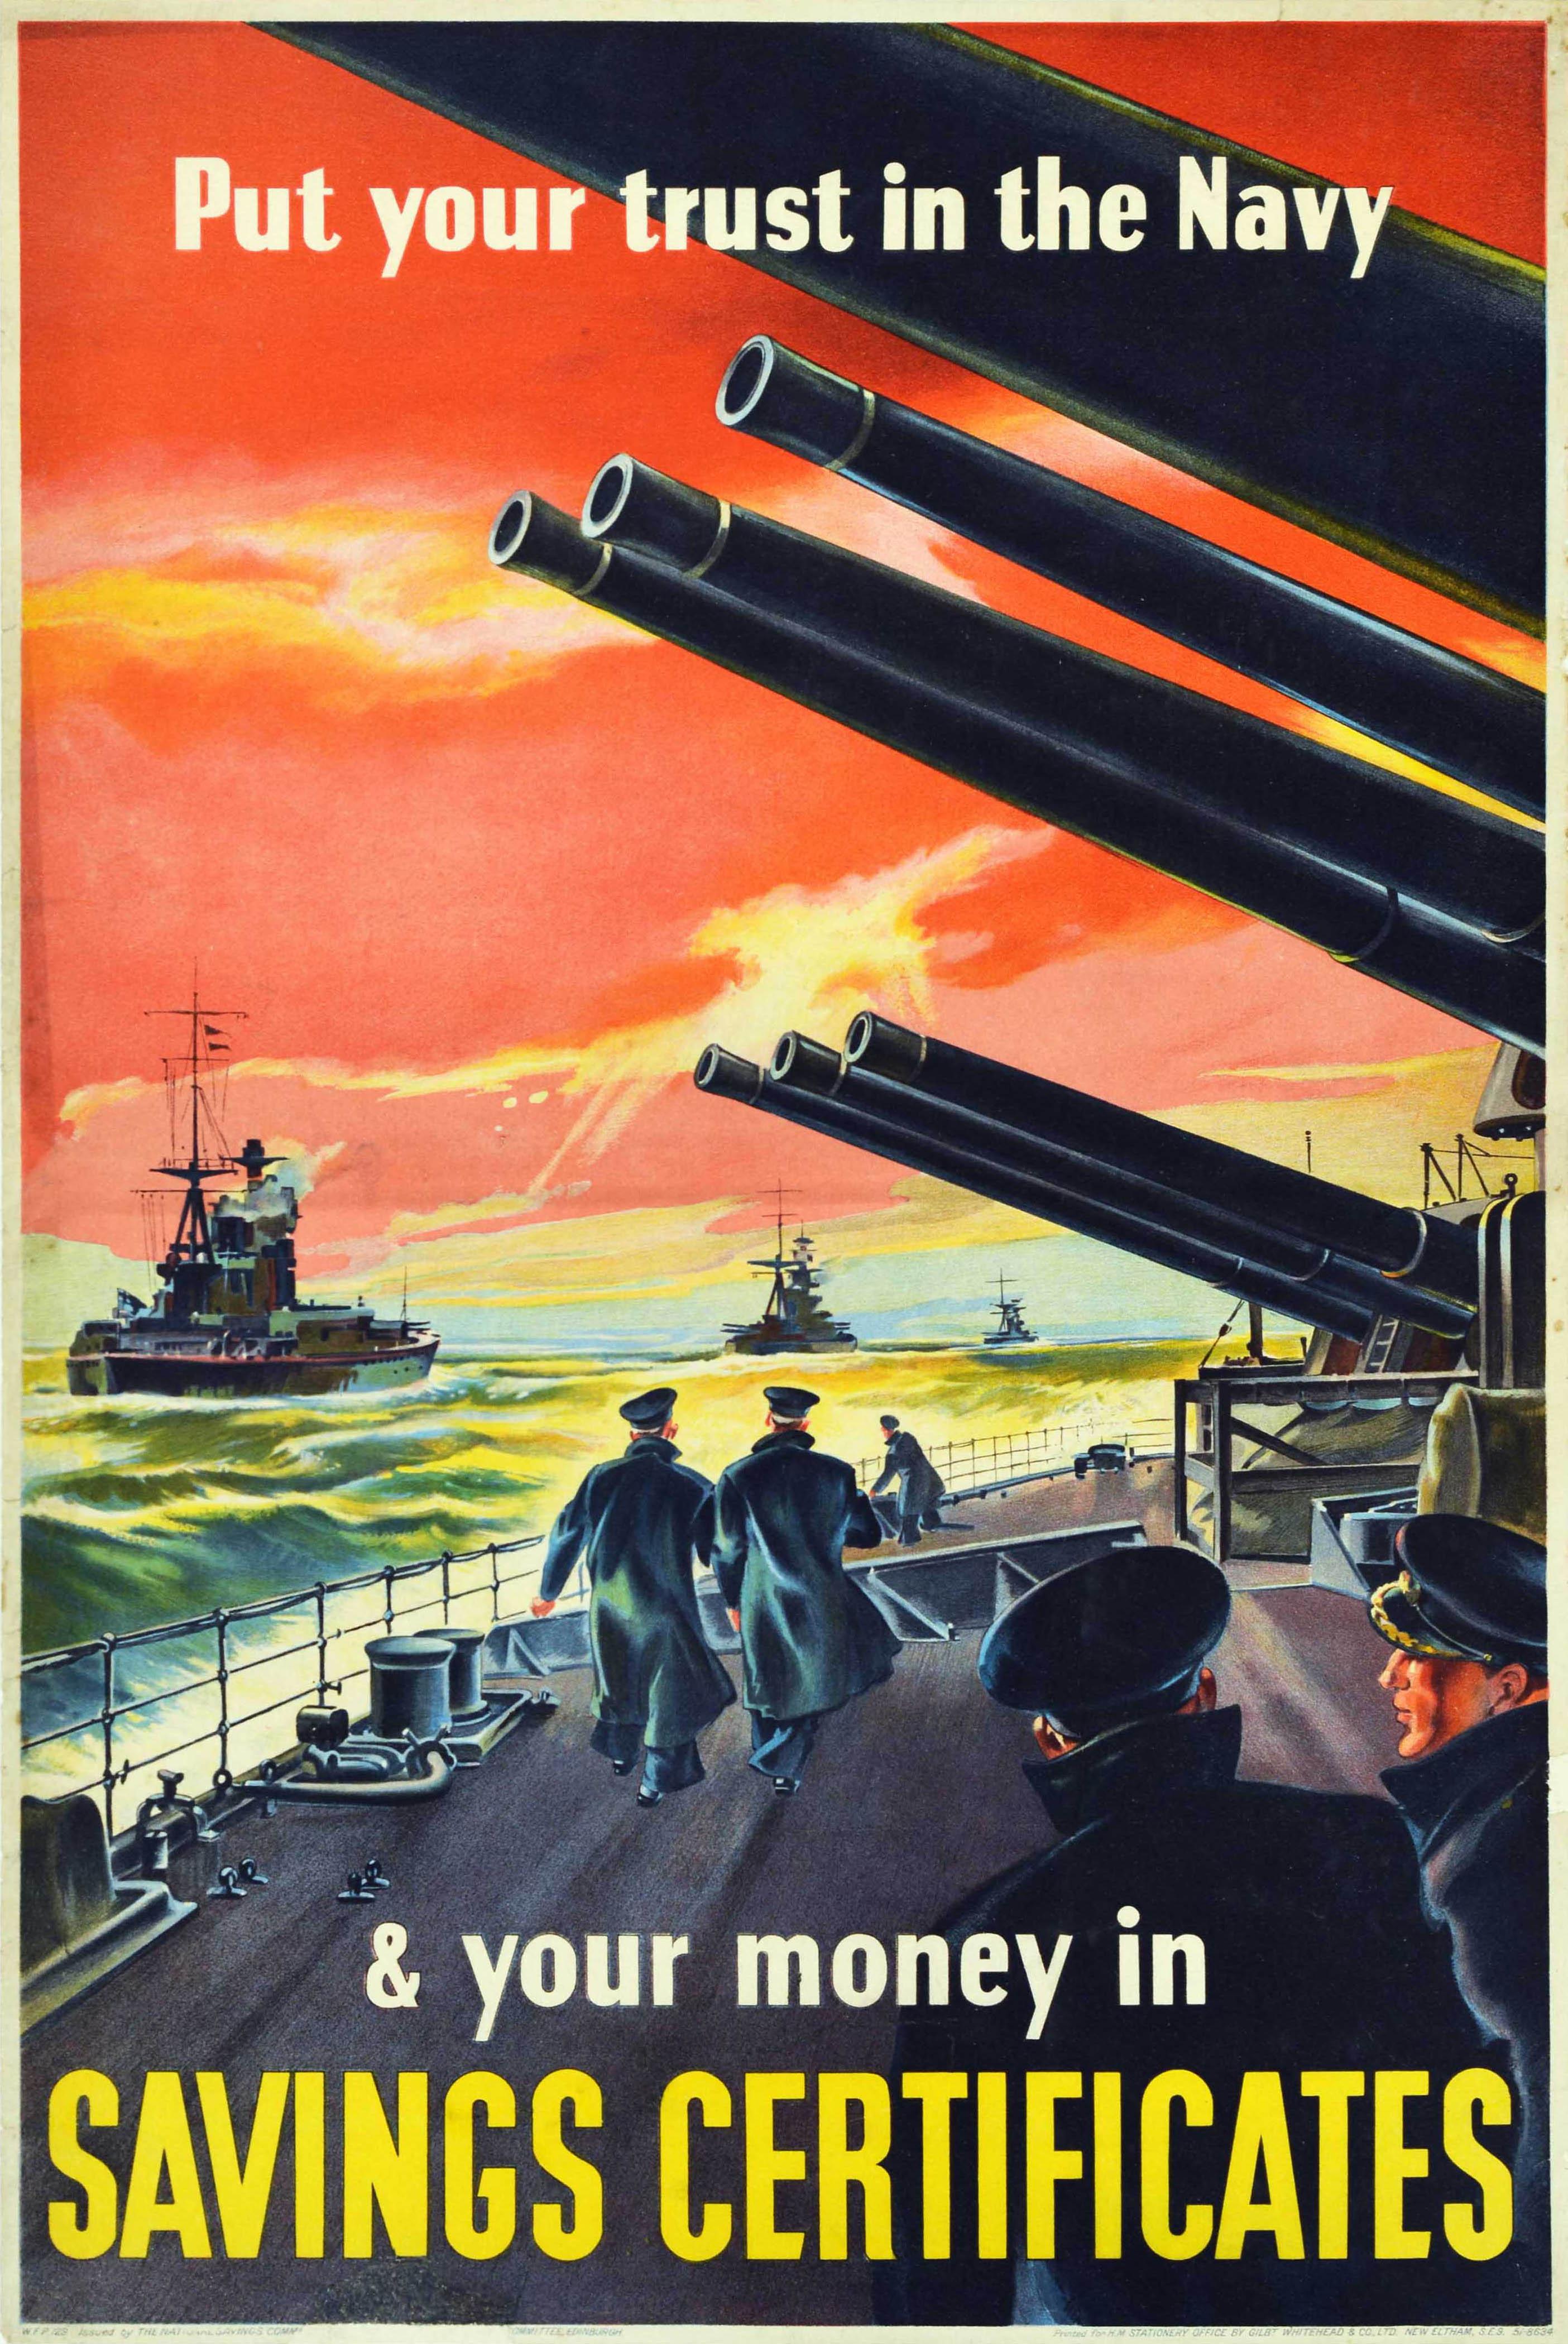 Unknown Print - Original Vintage WWII Poster For Savings Certificates Royal Navy War Ship Design